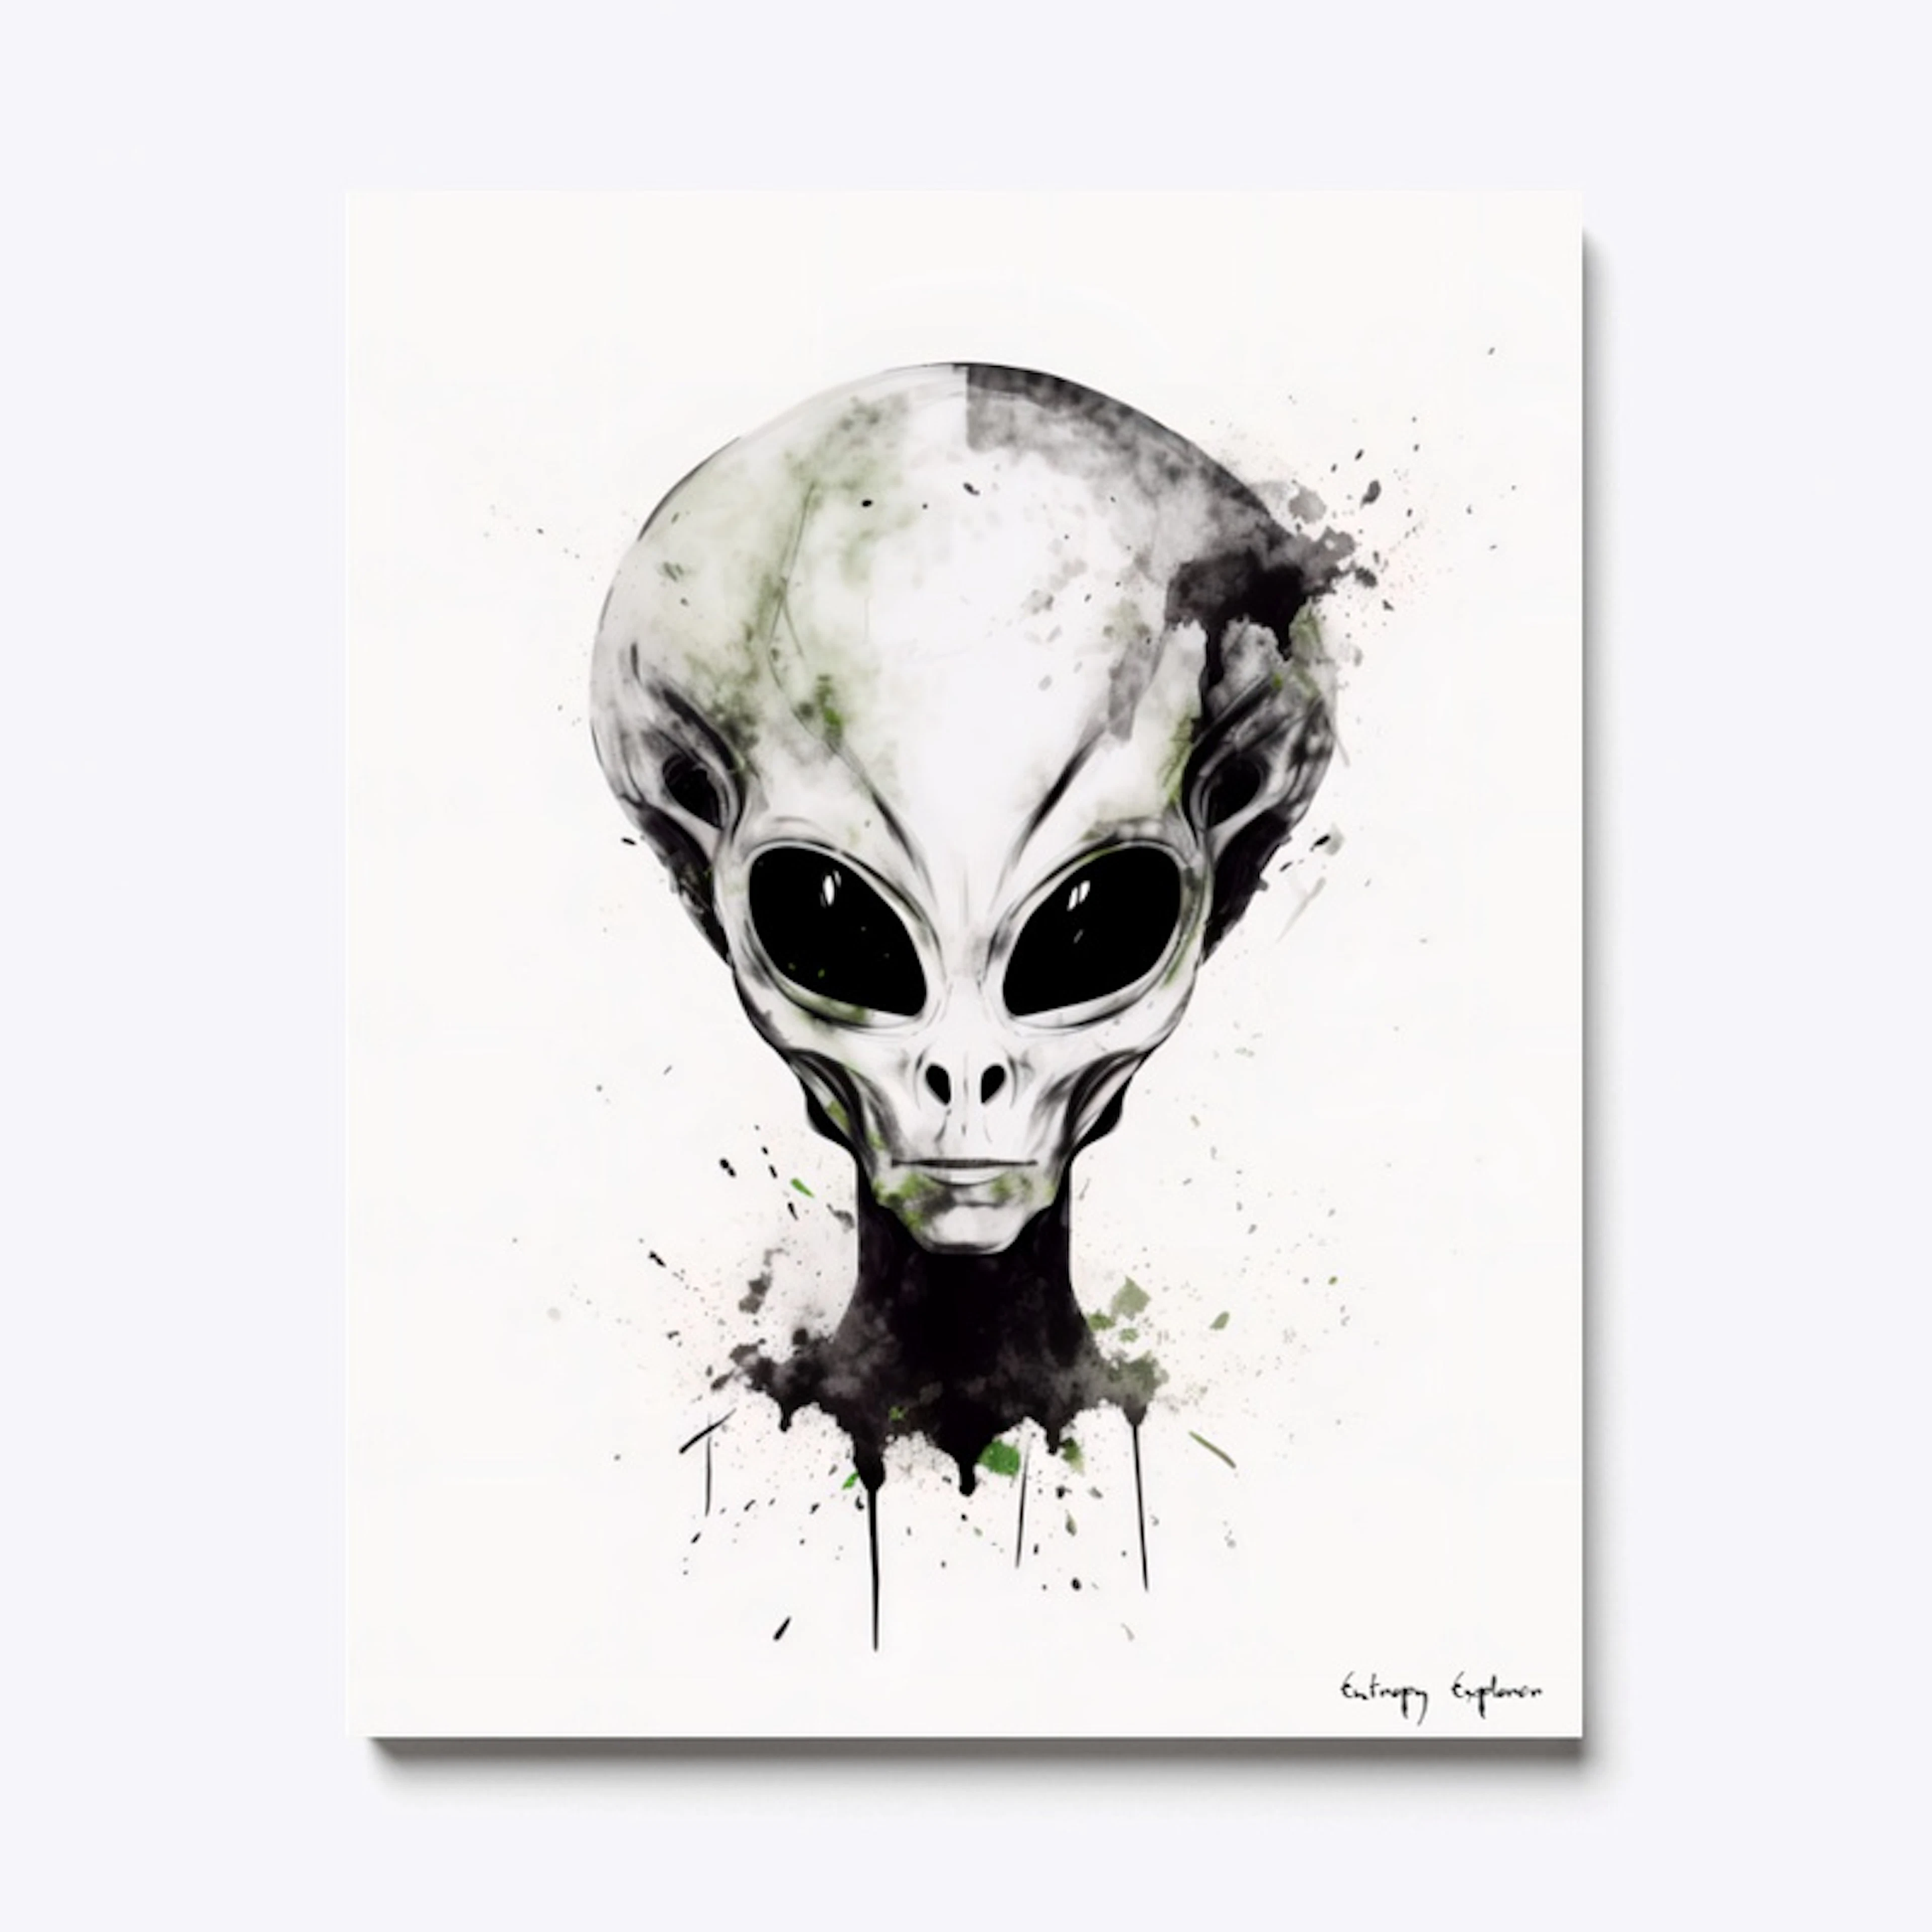 Zeta Alien (Limited Edition)